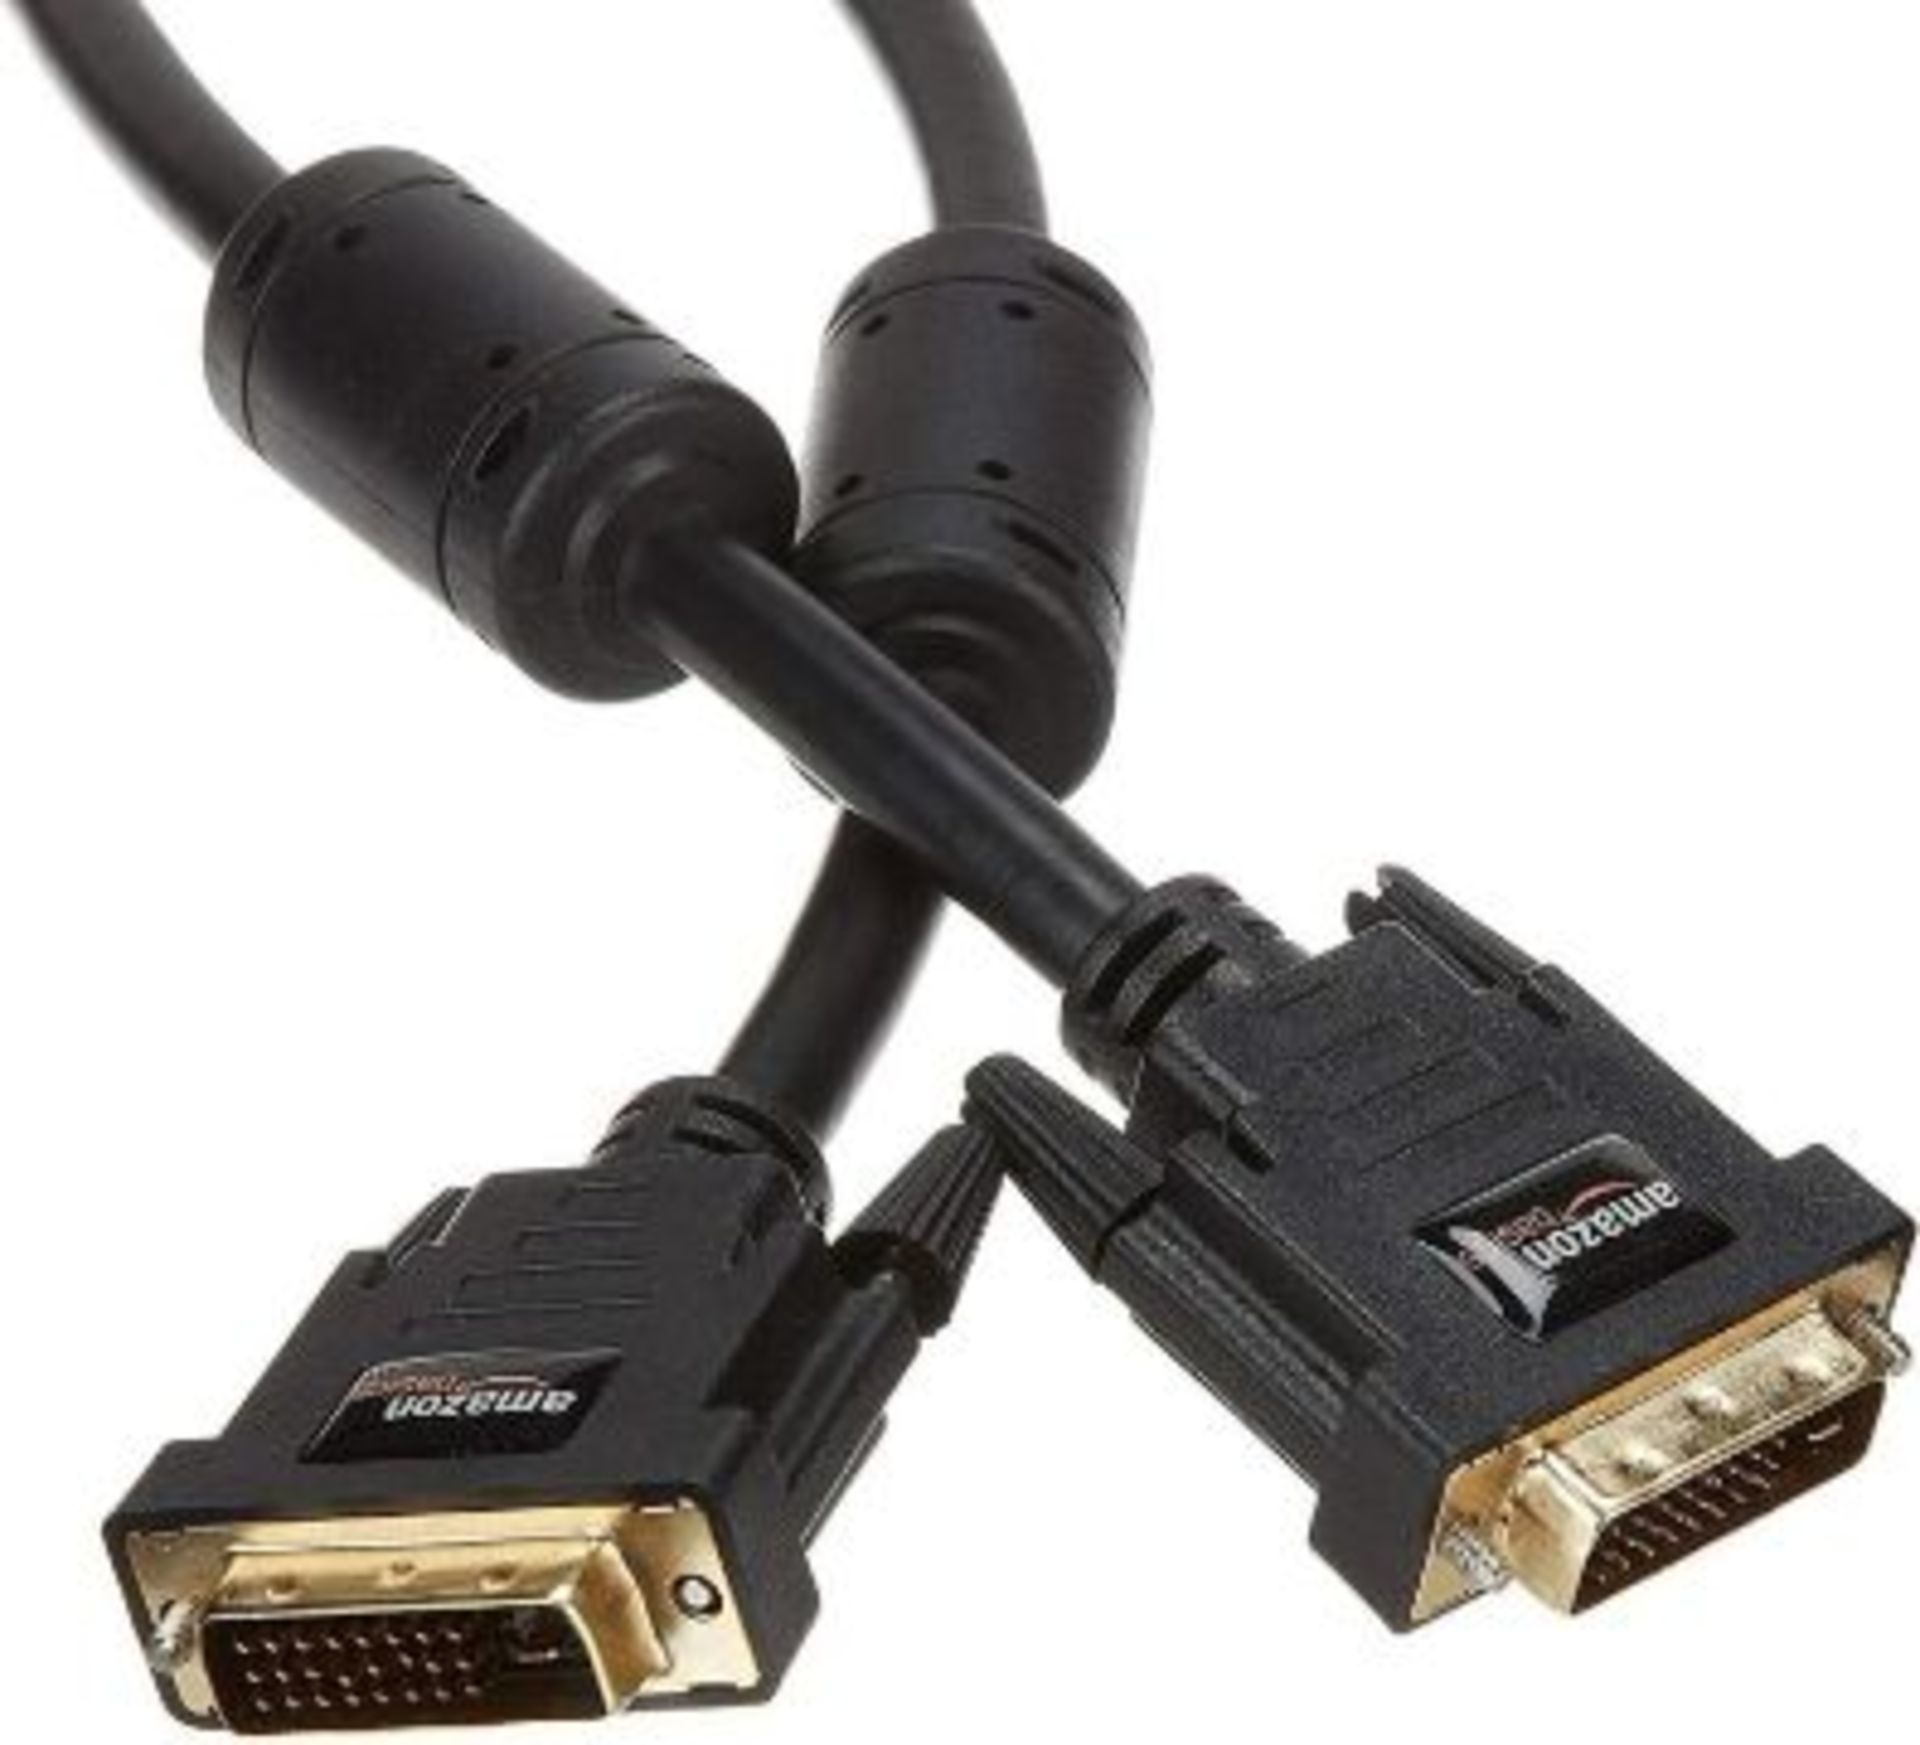 25 x Amazon Basics Gold Plated DVI To DVI Cable 3 m / 9.8 Feet